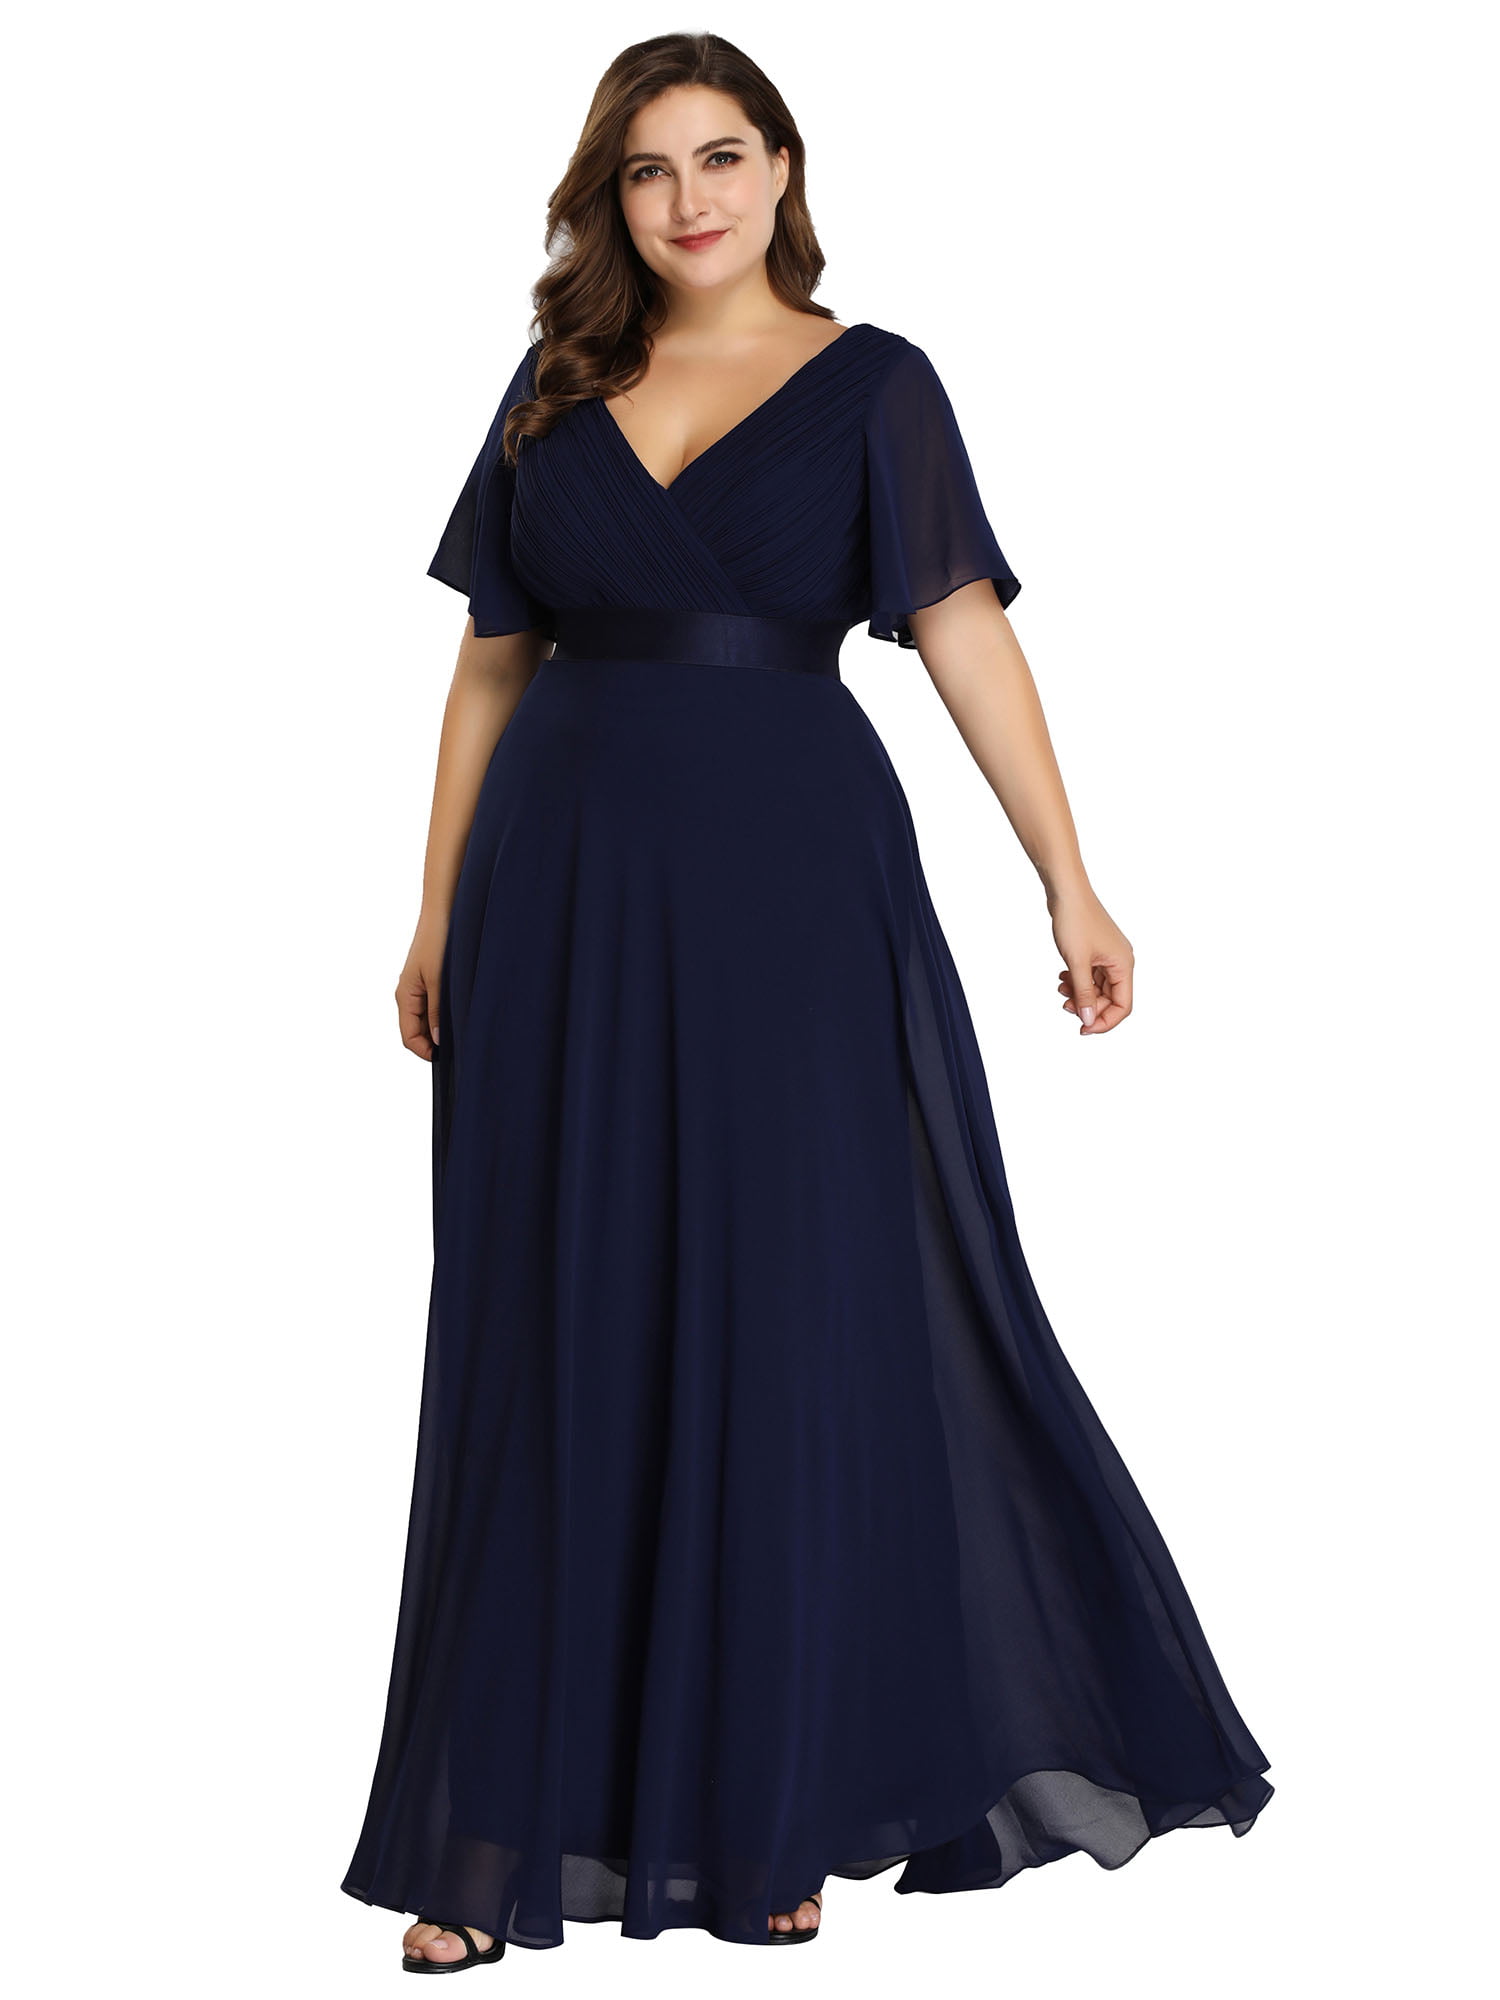 Buy > navy blue wedding guest dress plus size > in stock